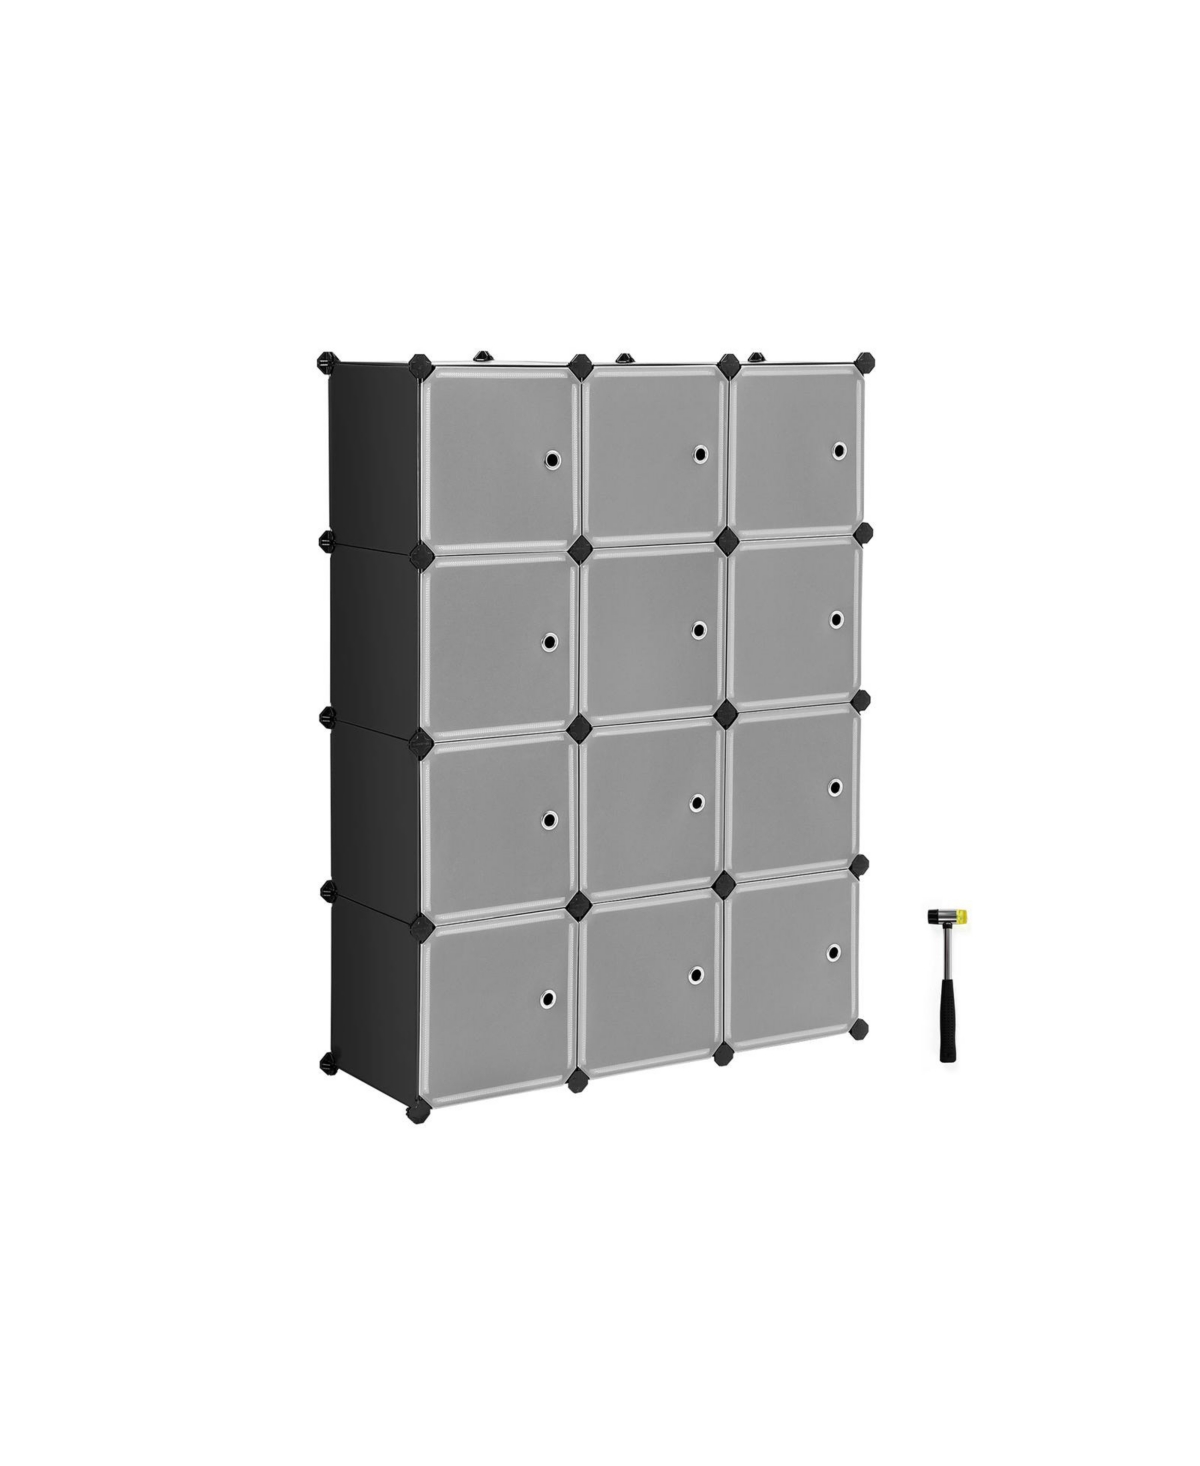 12-cube Storage Organizer, Interlocking Plastic Cubes With Divider Design With Doors - Black